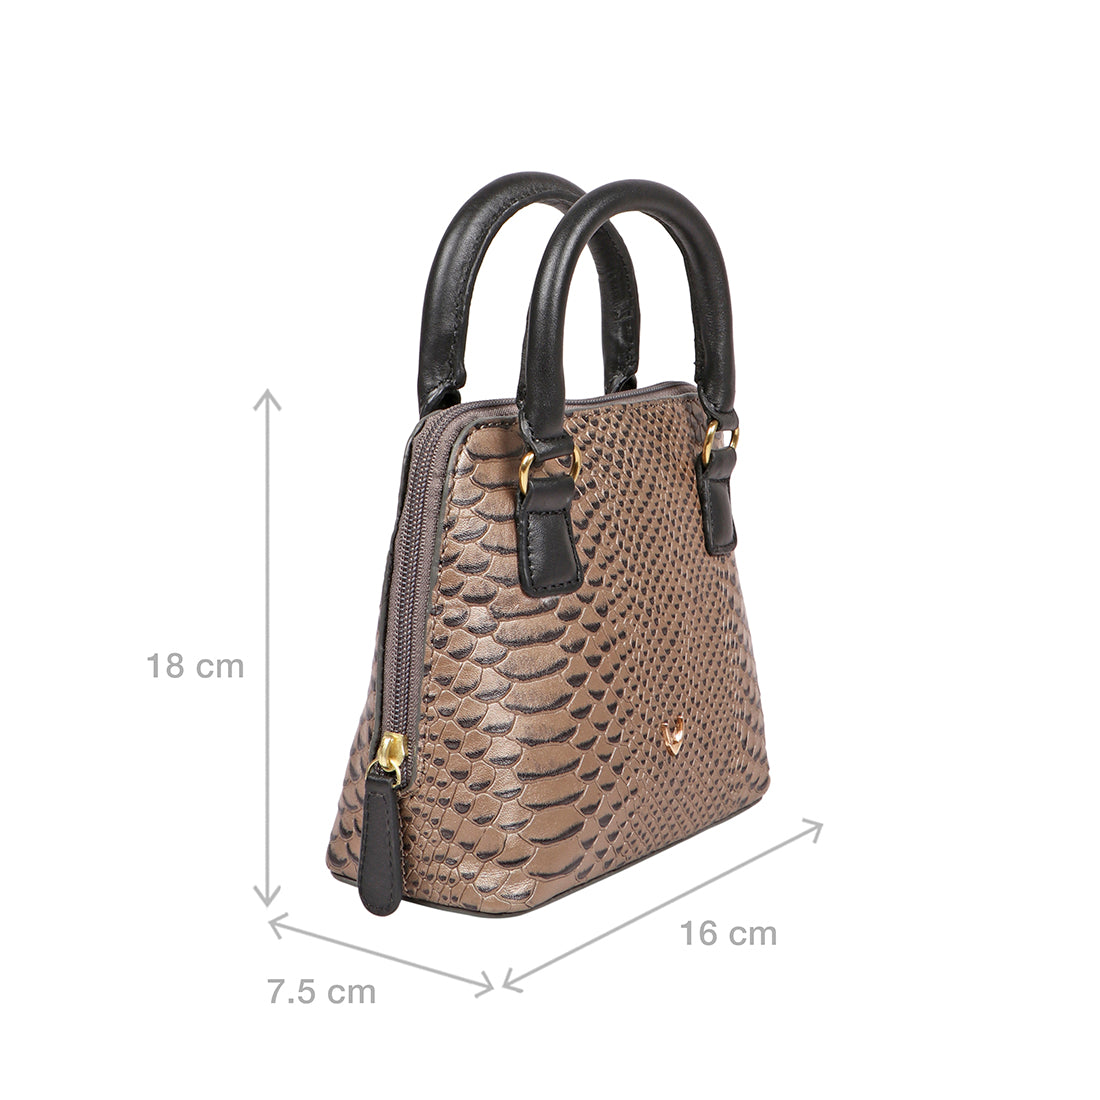 Buy Red Nyle 01 Sling Bag Online - Hidesign